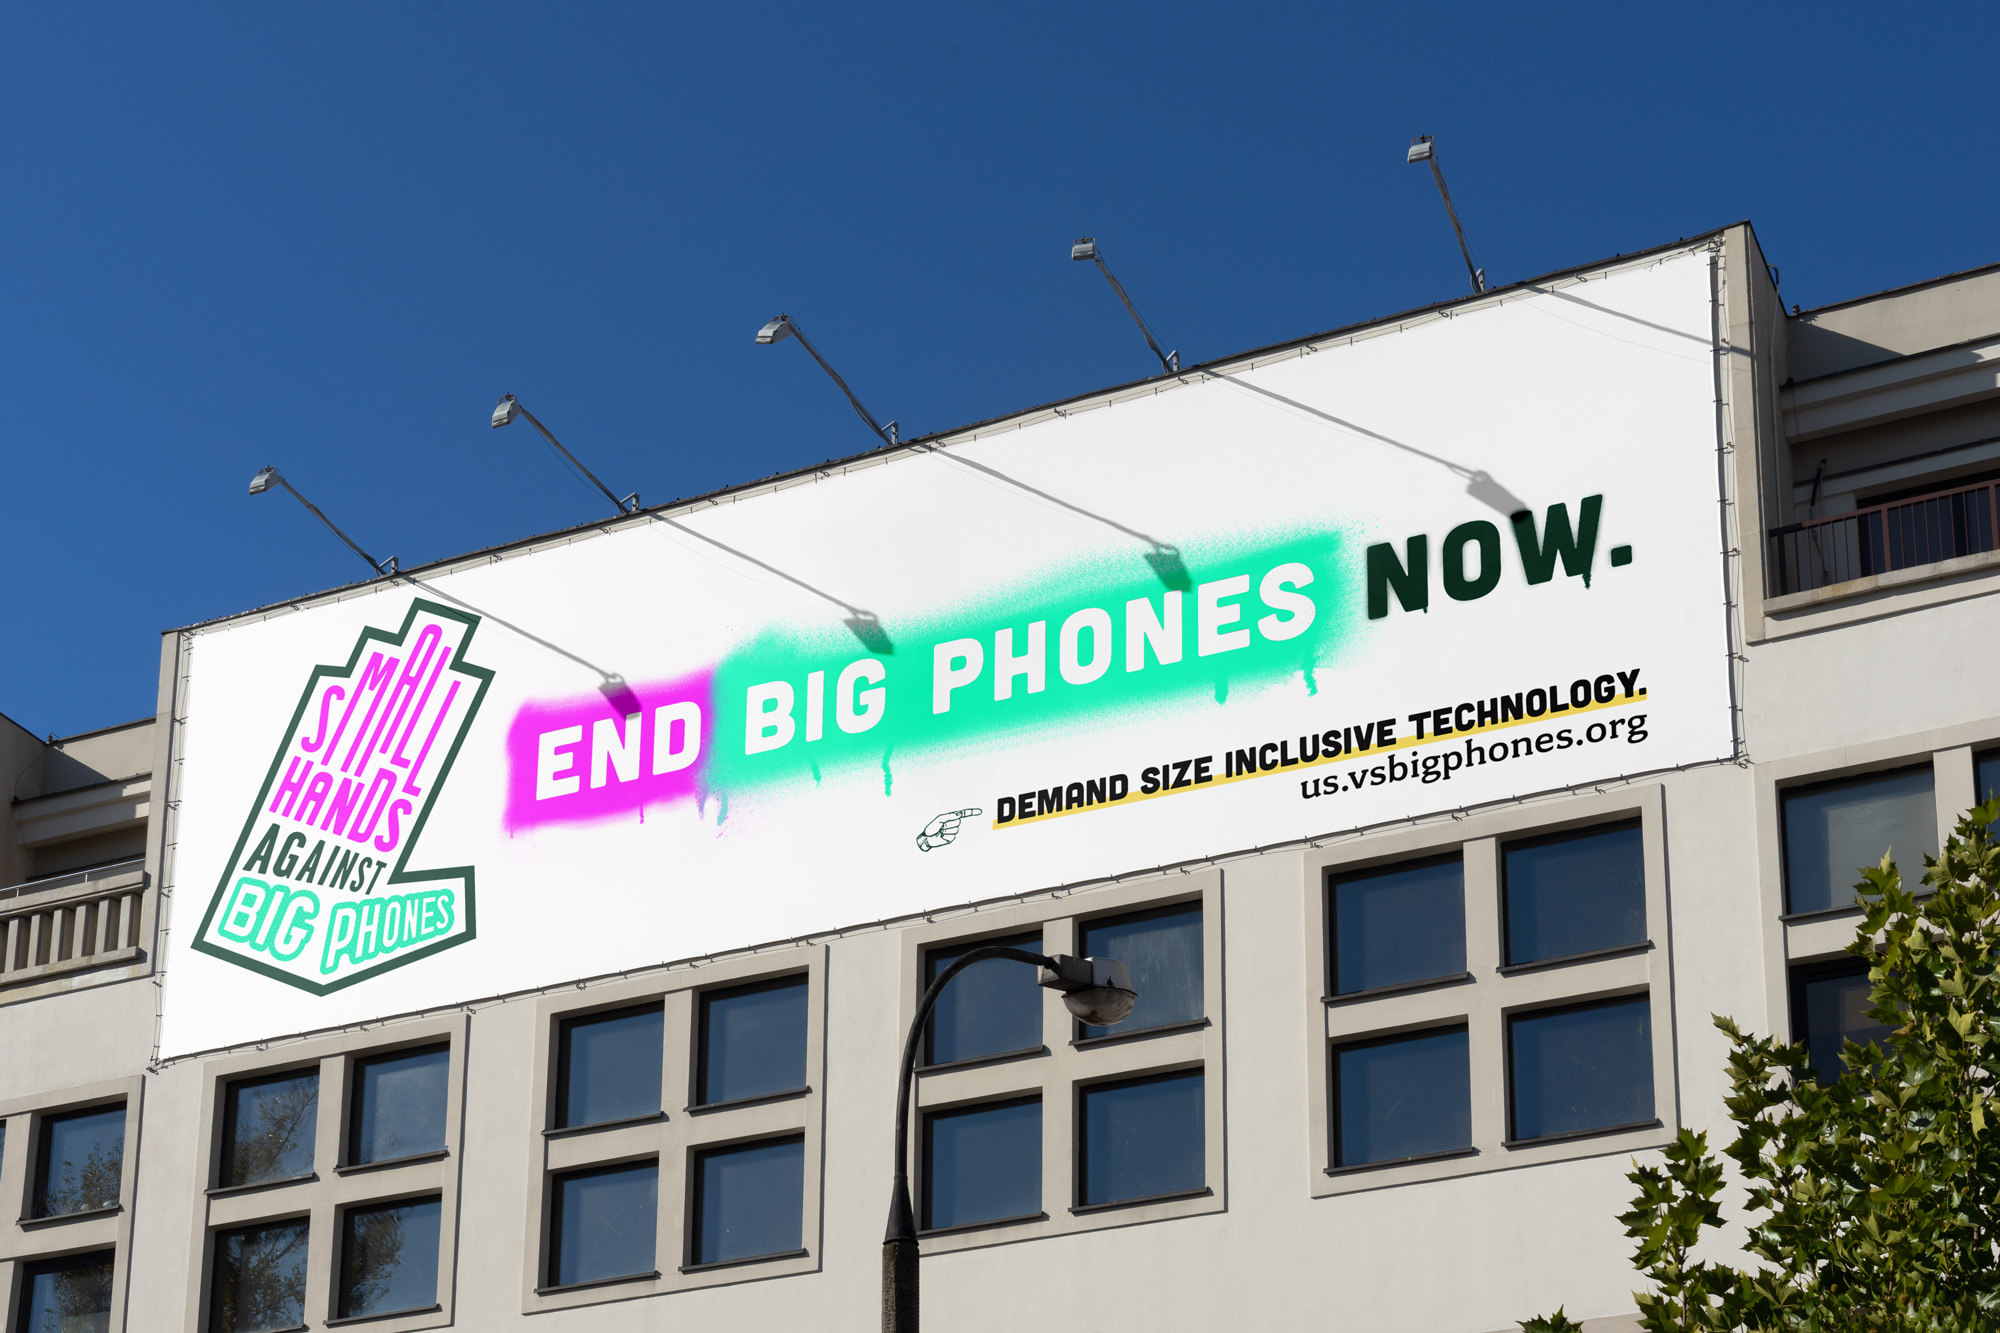 Billboard reads 'End Big Phones Now. Demand size inclusive technology. us.vsbigphones.org'